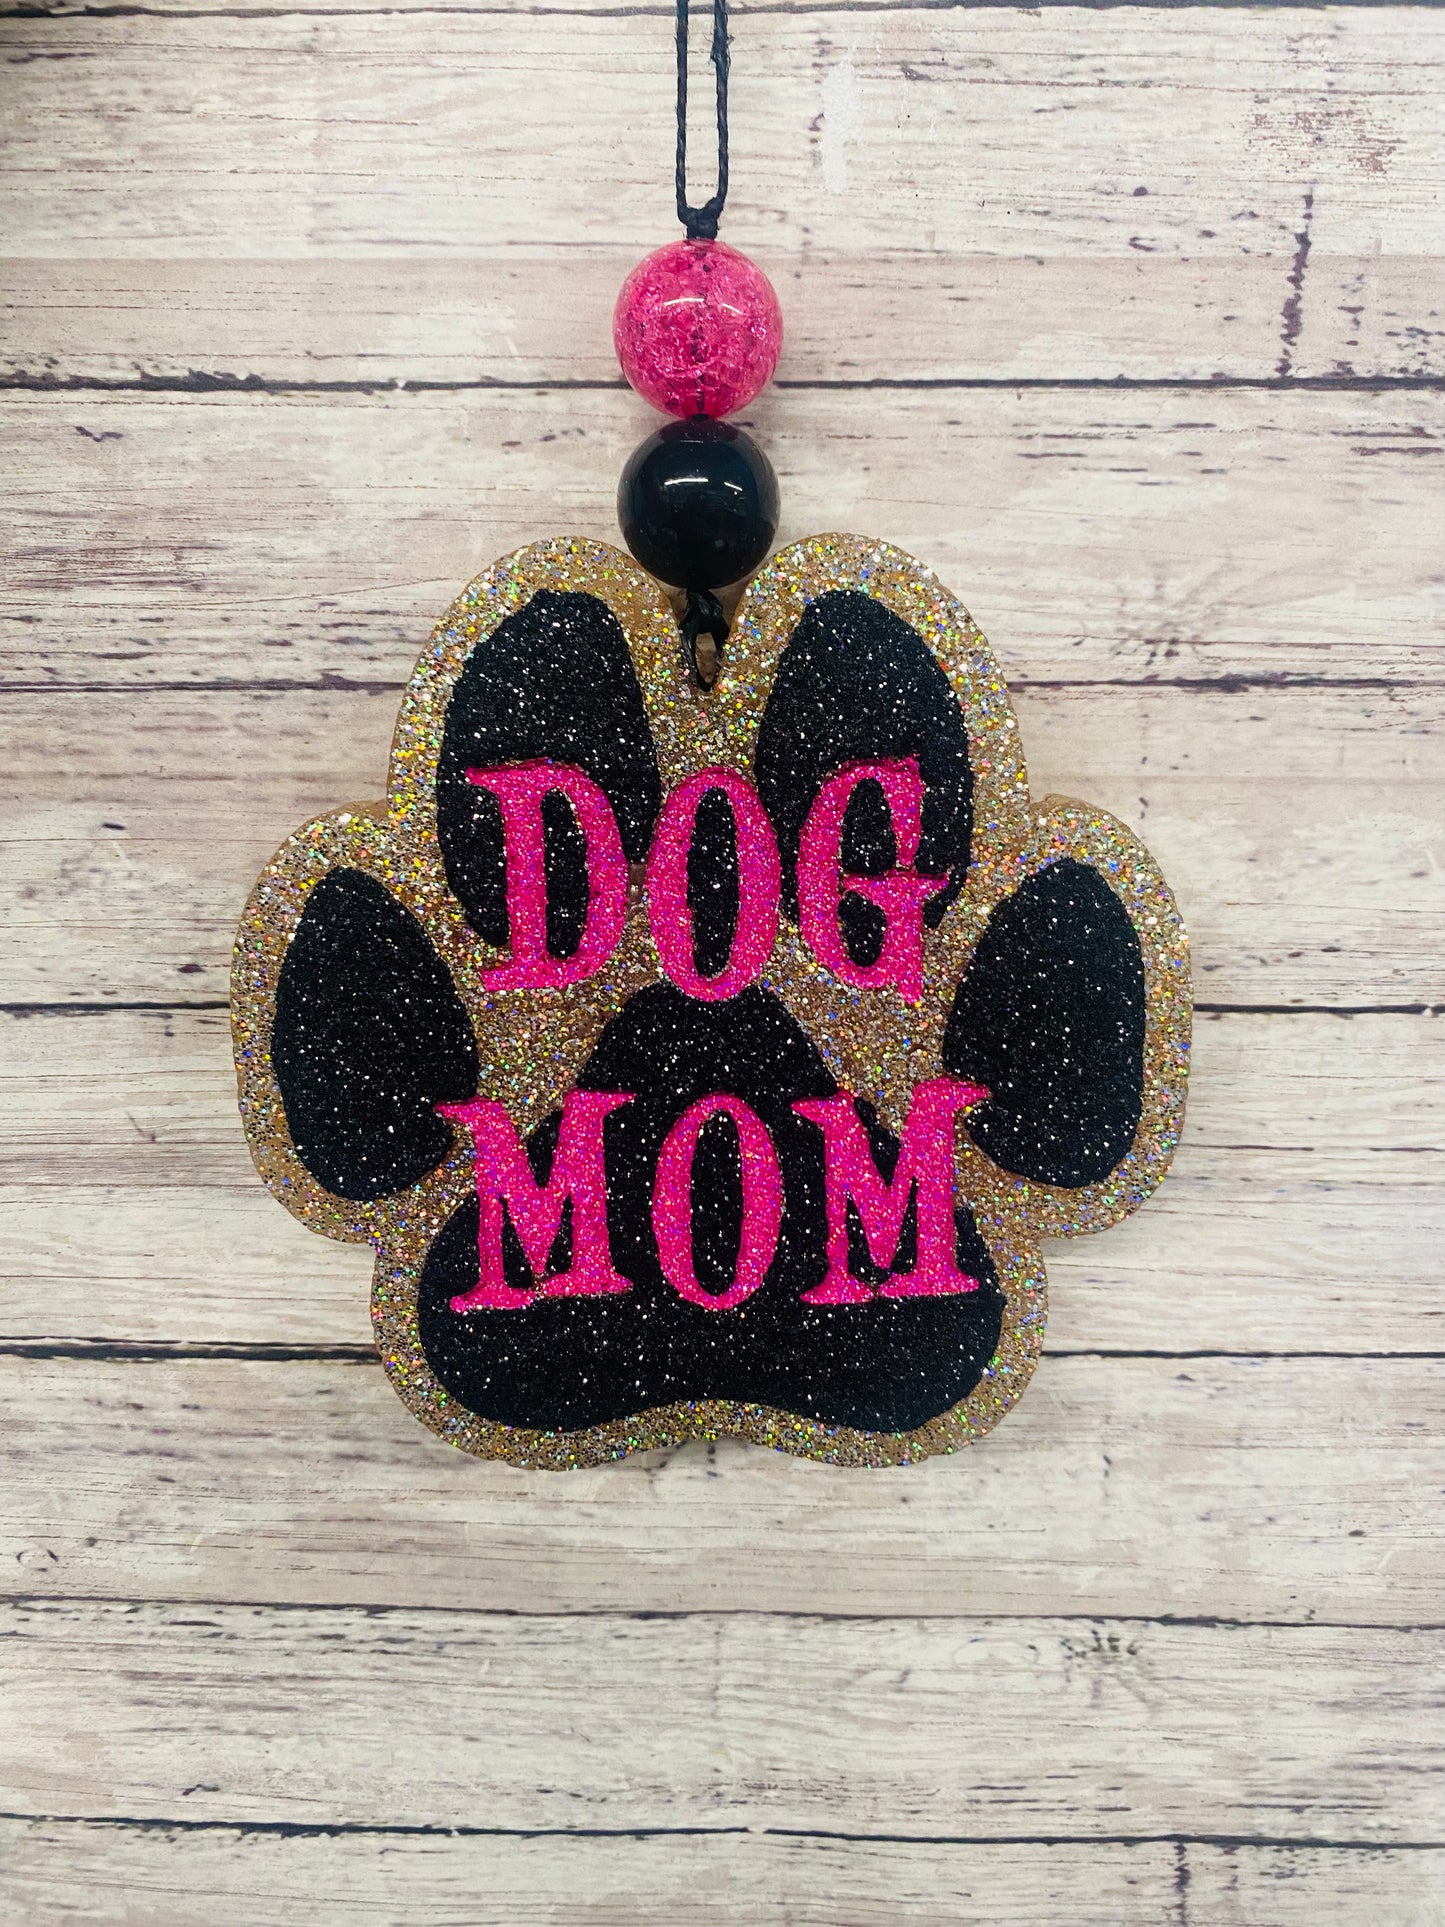 Dog Mom Paw Print